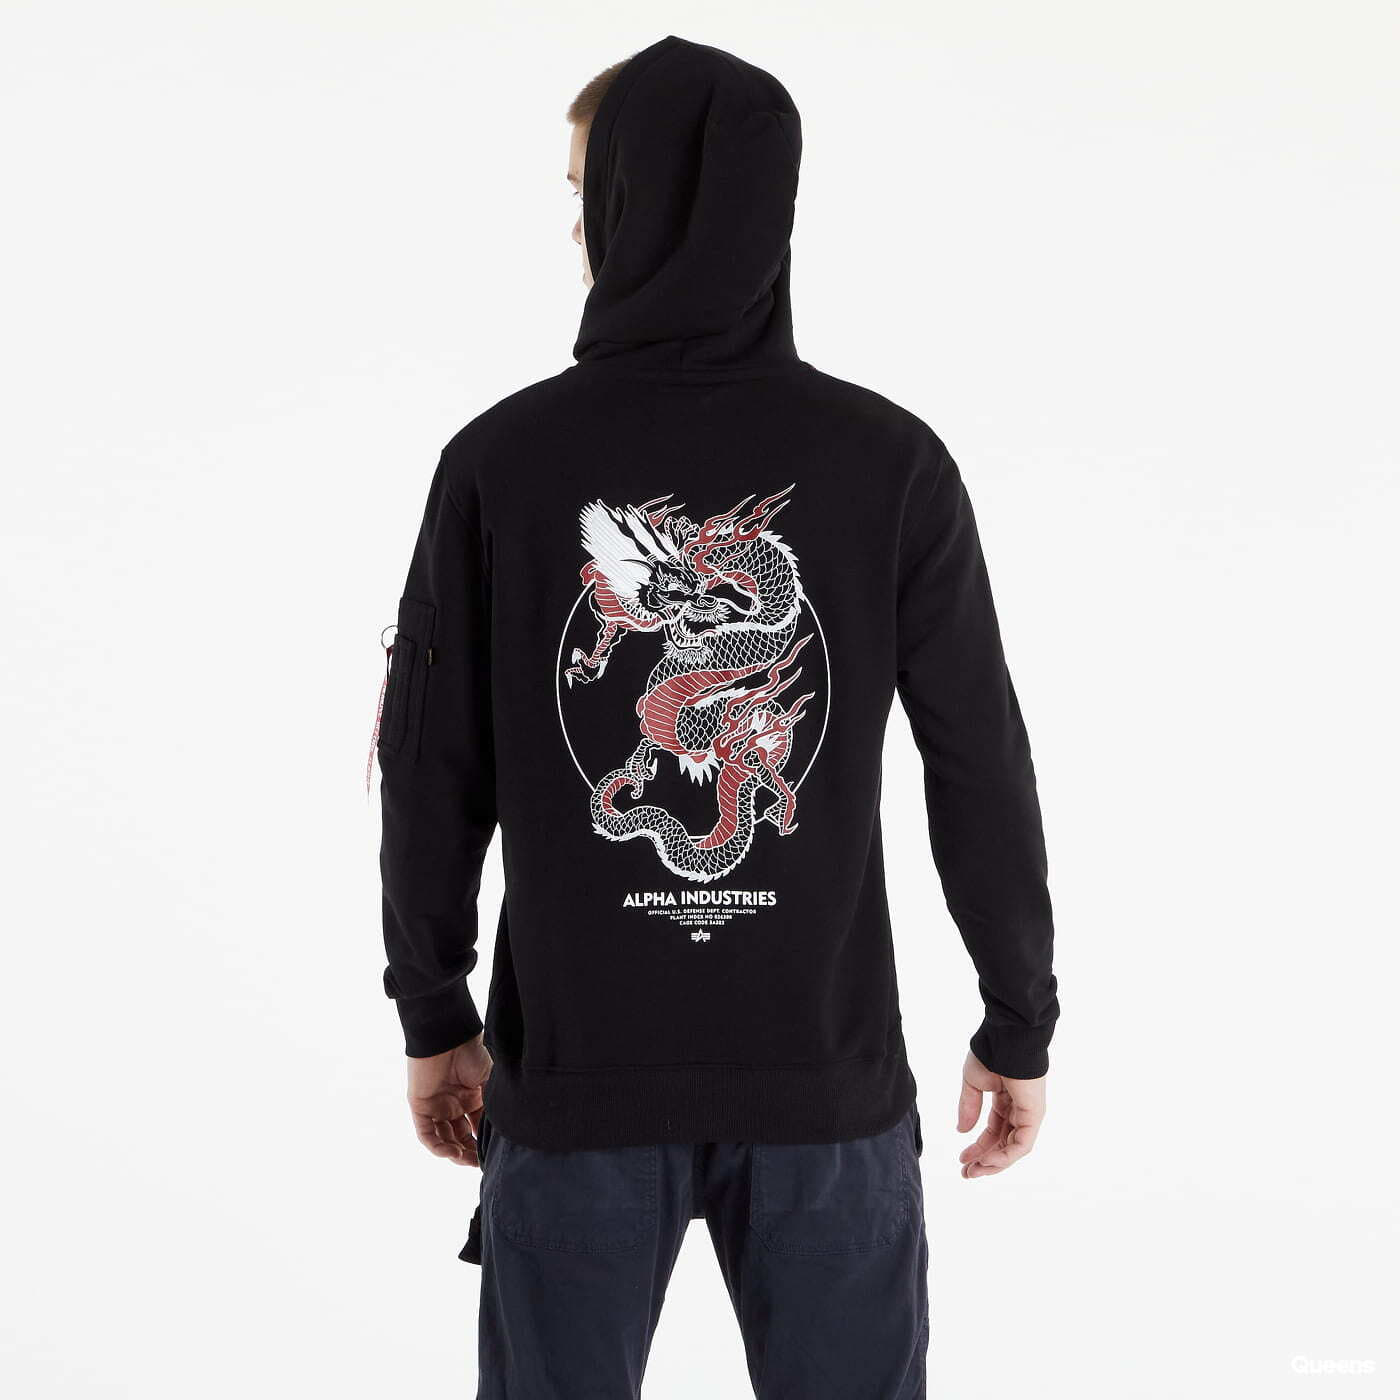 Hoody | Heritage Alpha and Dragon Industries Black Queens Hoodies sweatshirts